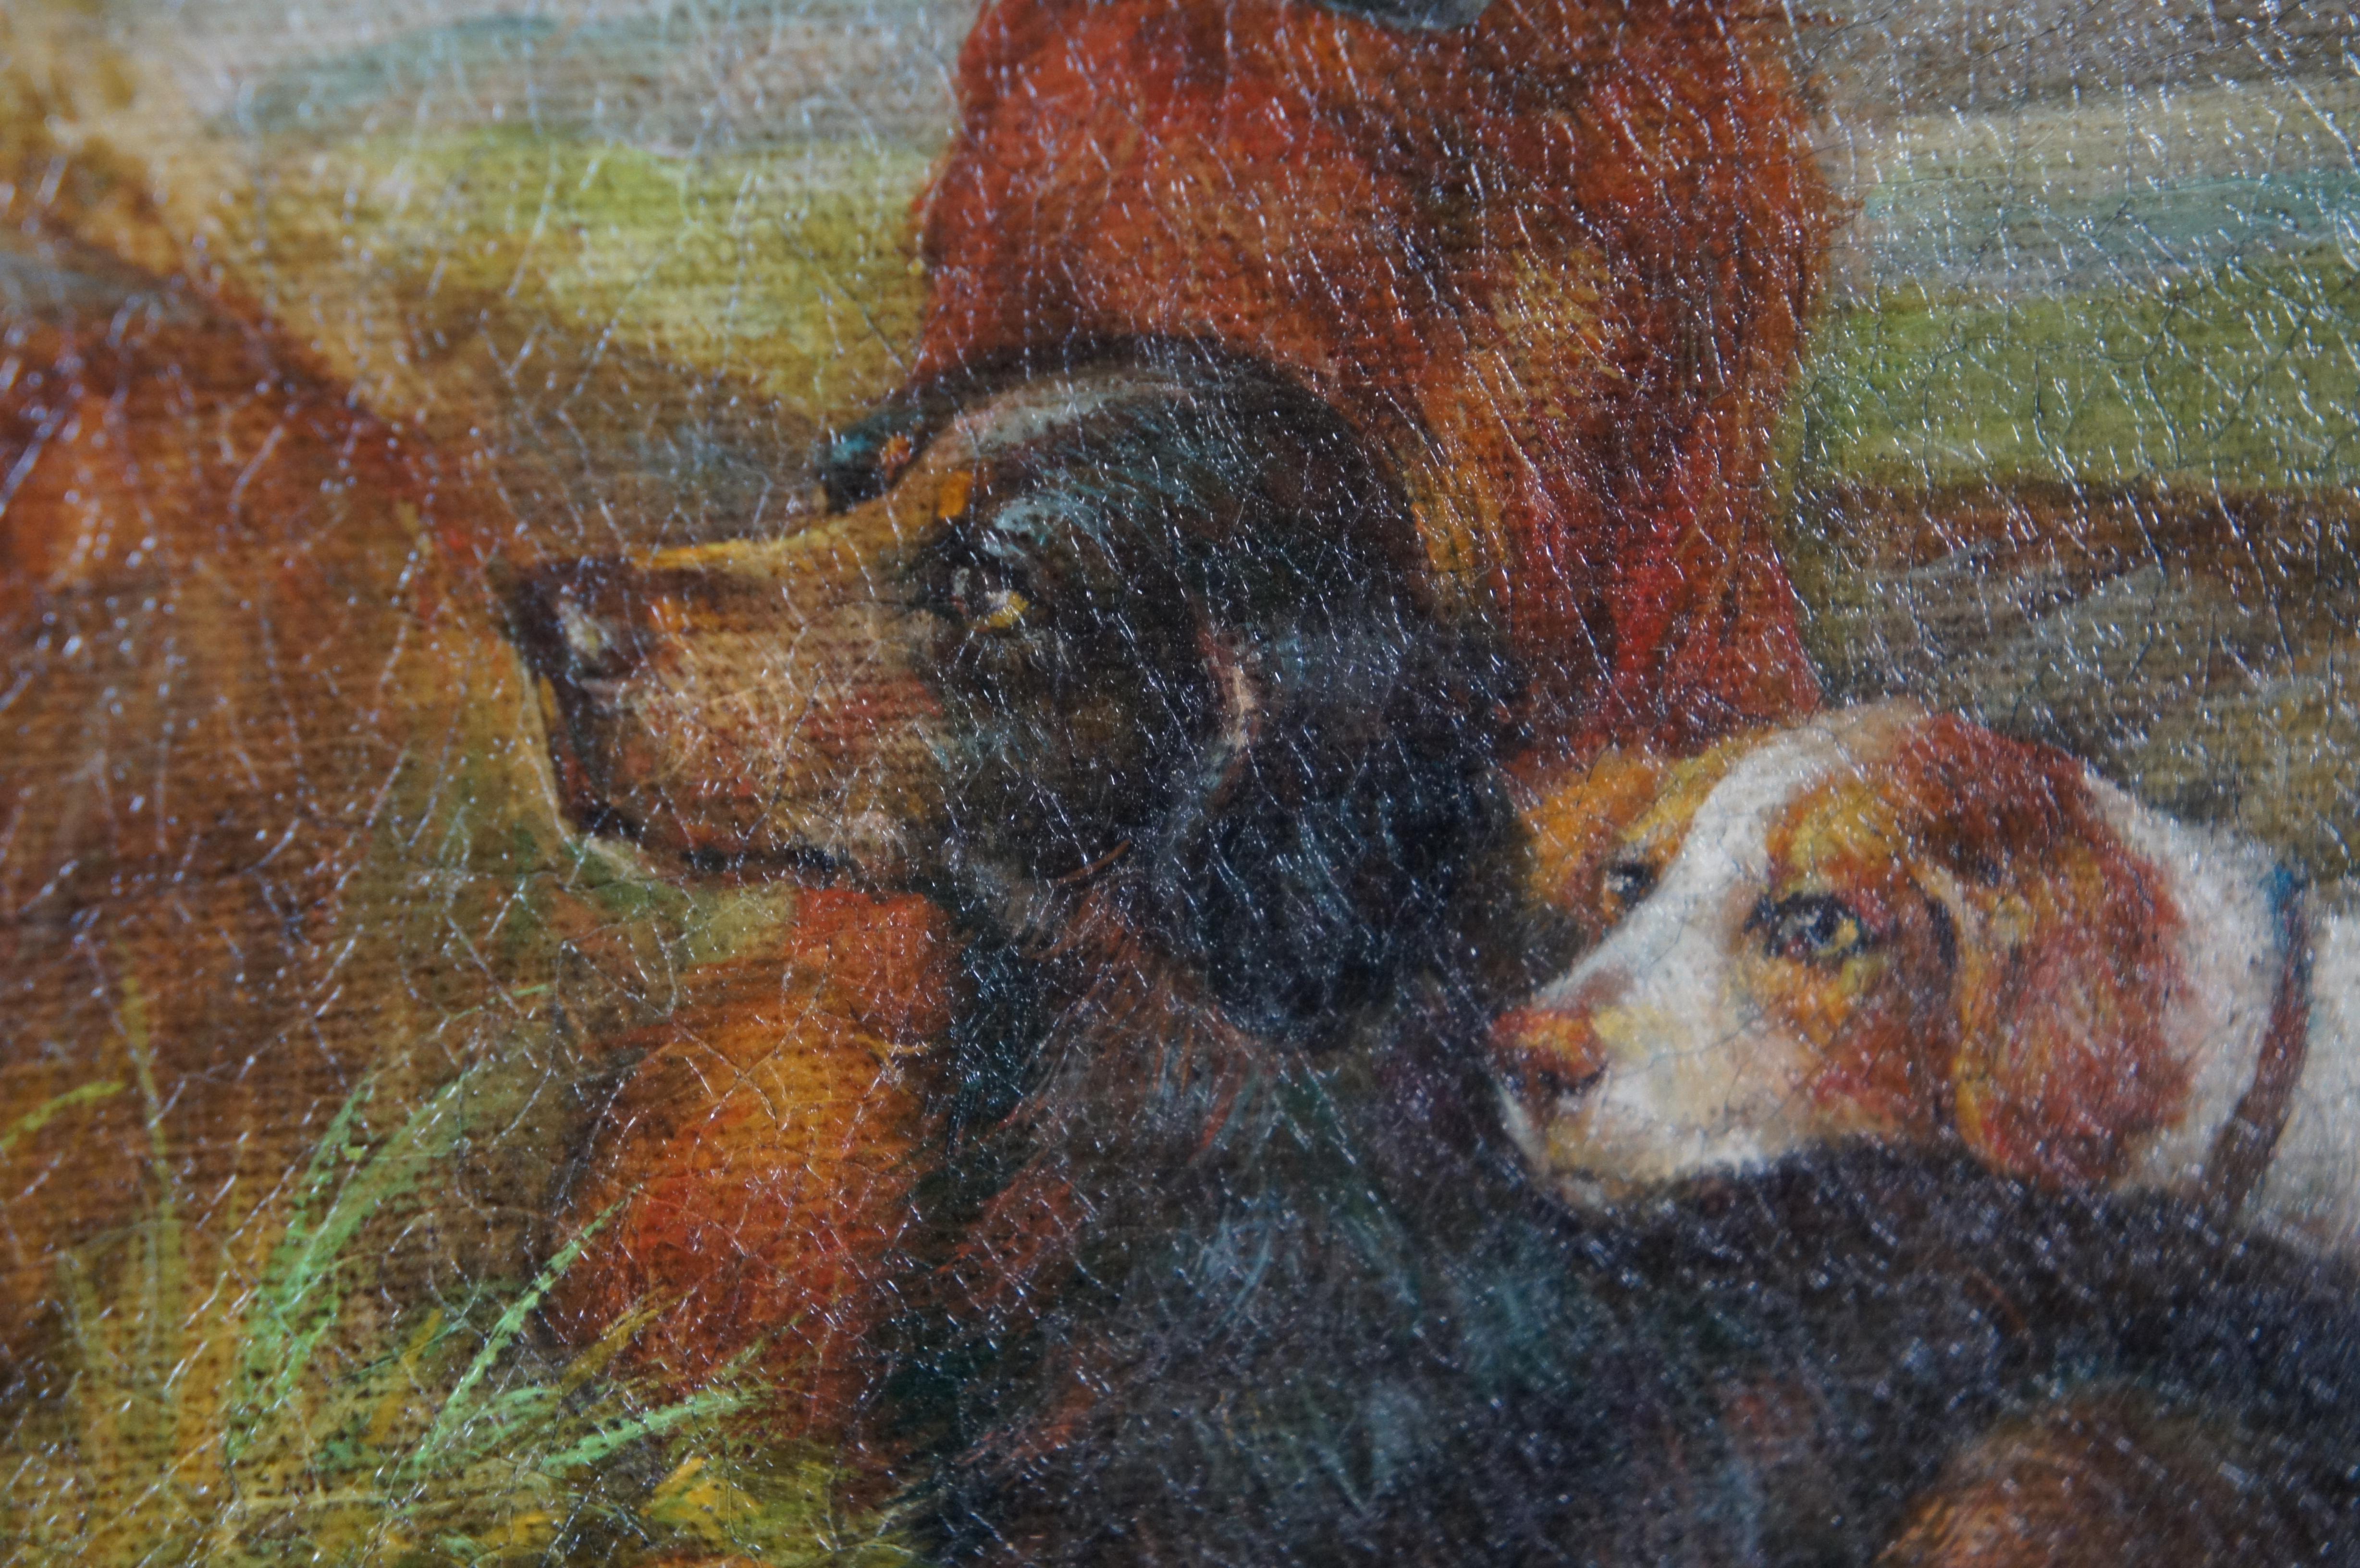 2 Vintage Spaniel Dog Portrait Oil Paintings on Canvas Gold Frames 20